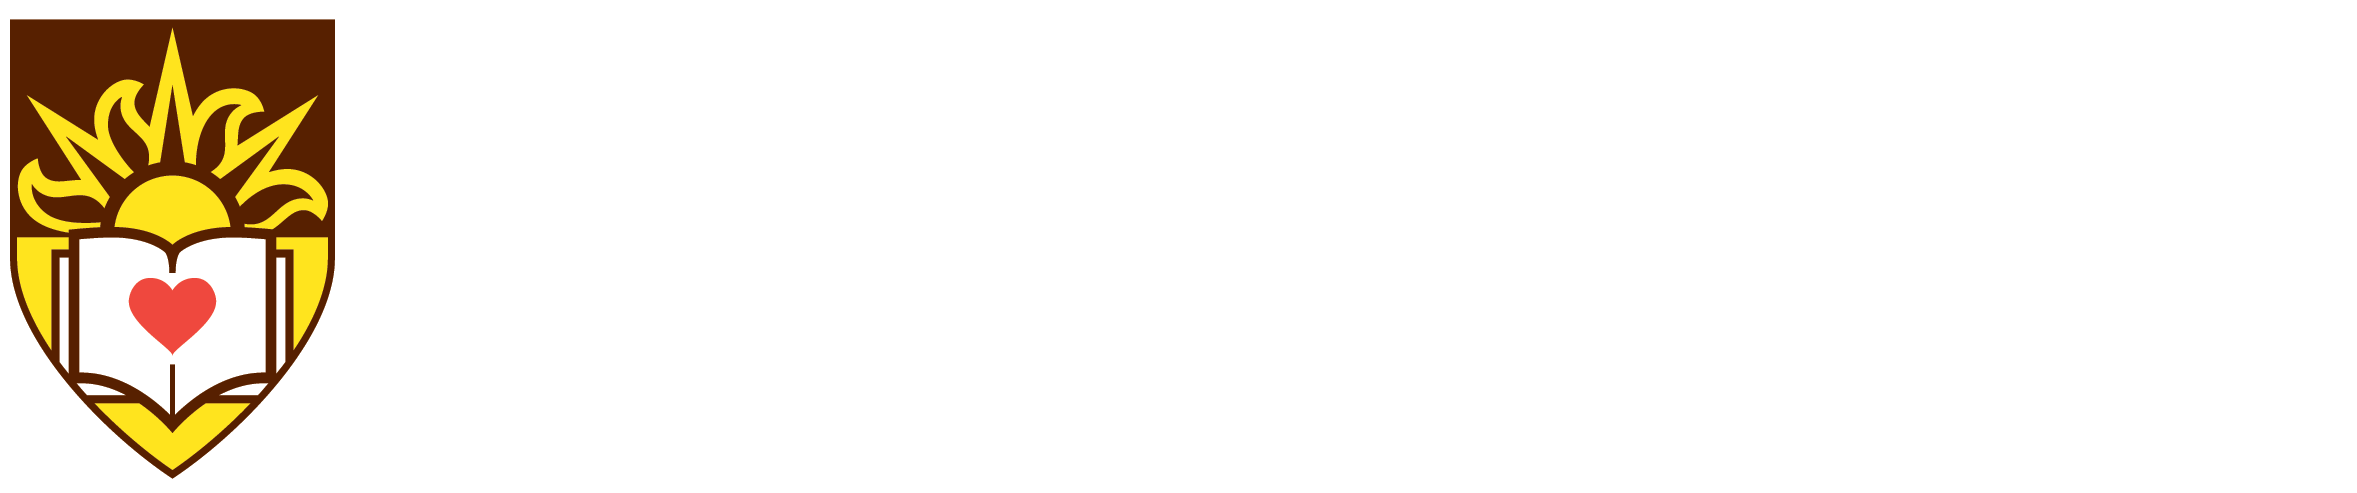 Lehigh University Office of International Affairs Logo Footer